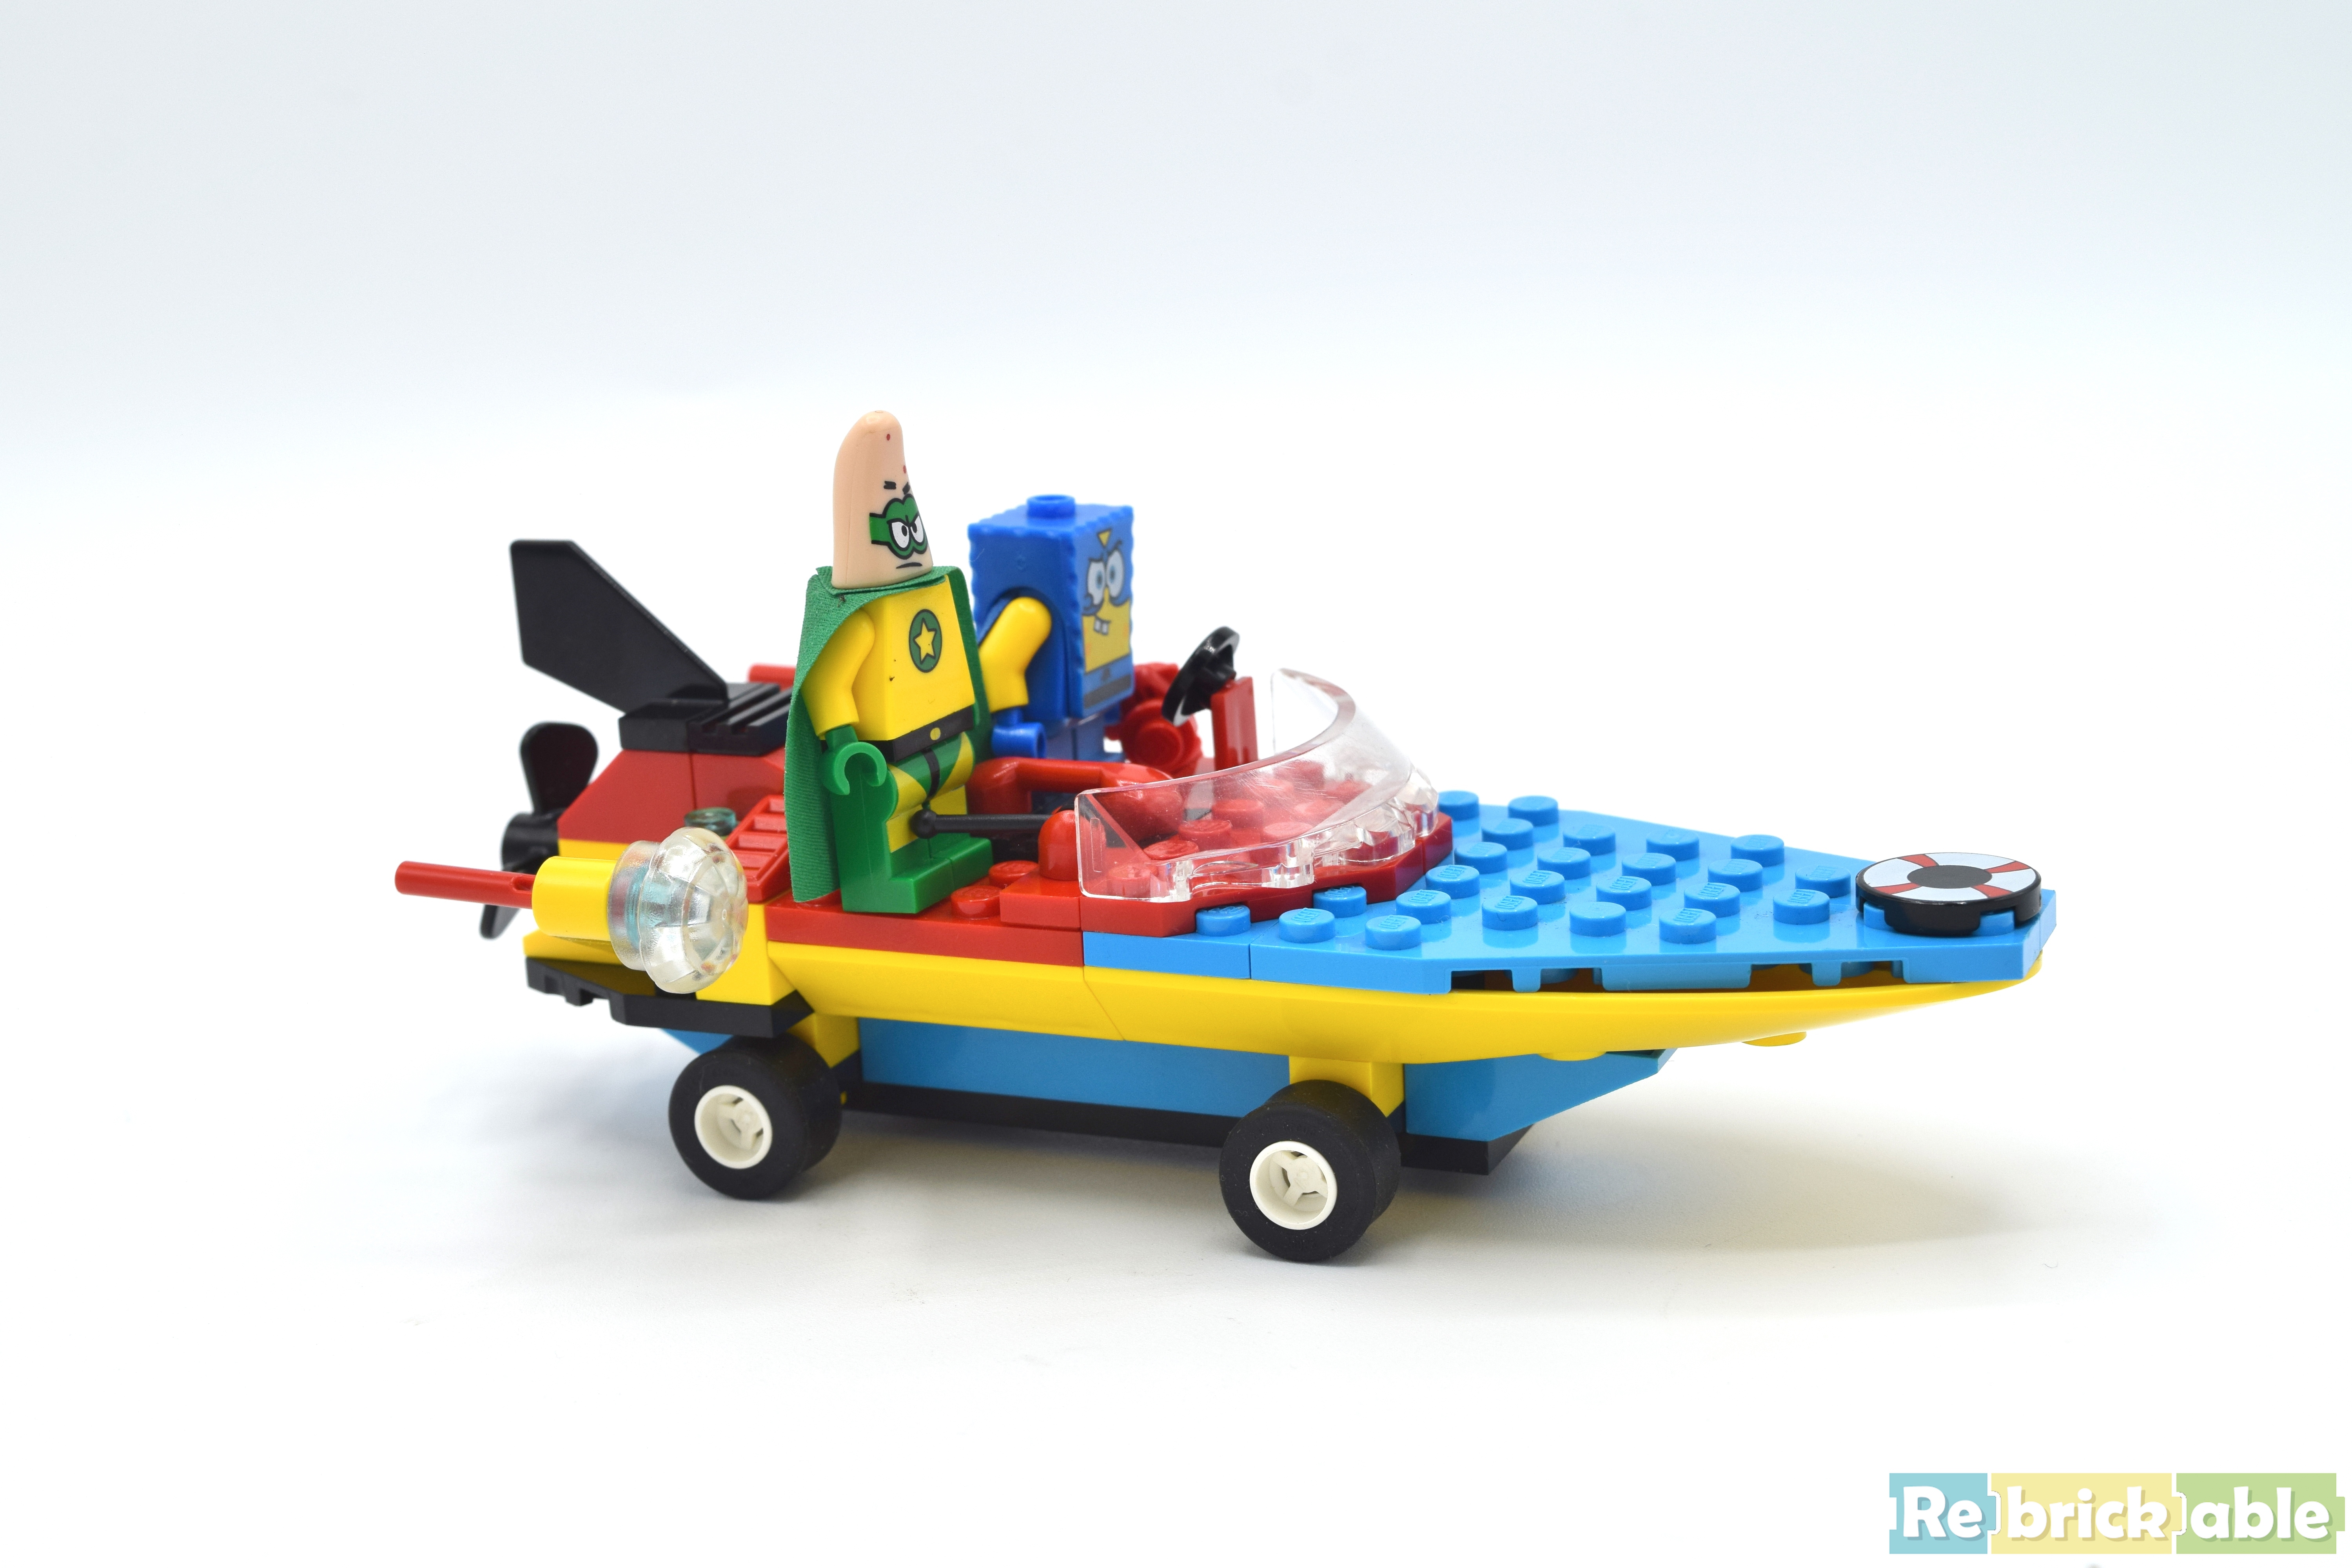 NO BRICKS LEGO 3815 SPONGEBOB "HEROES OF THE DEEP" INSTRUCTION MANUAL